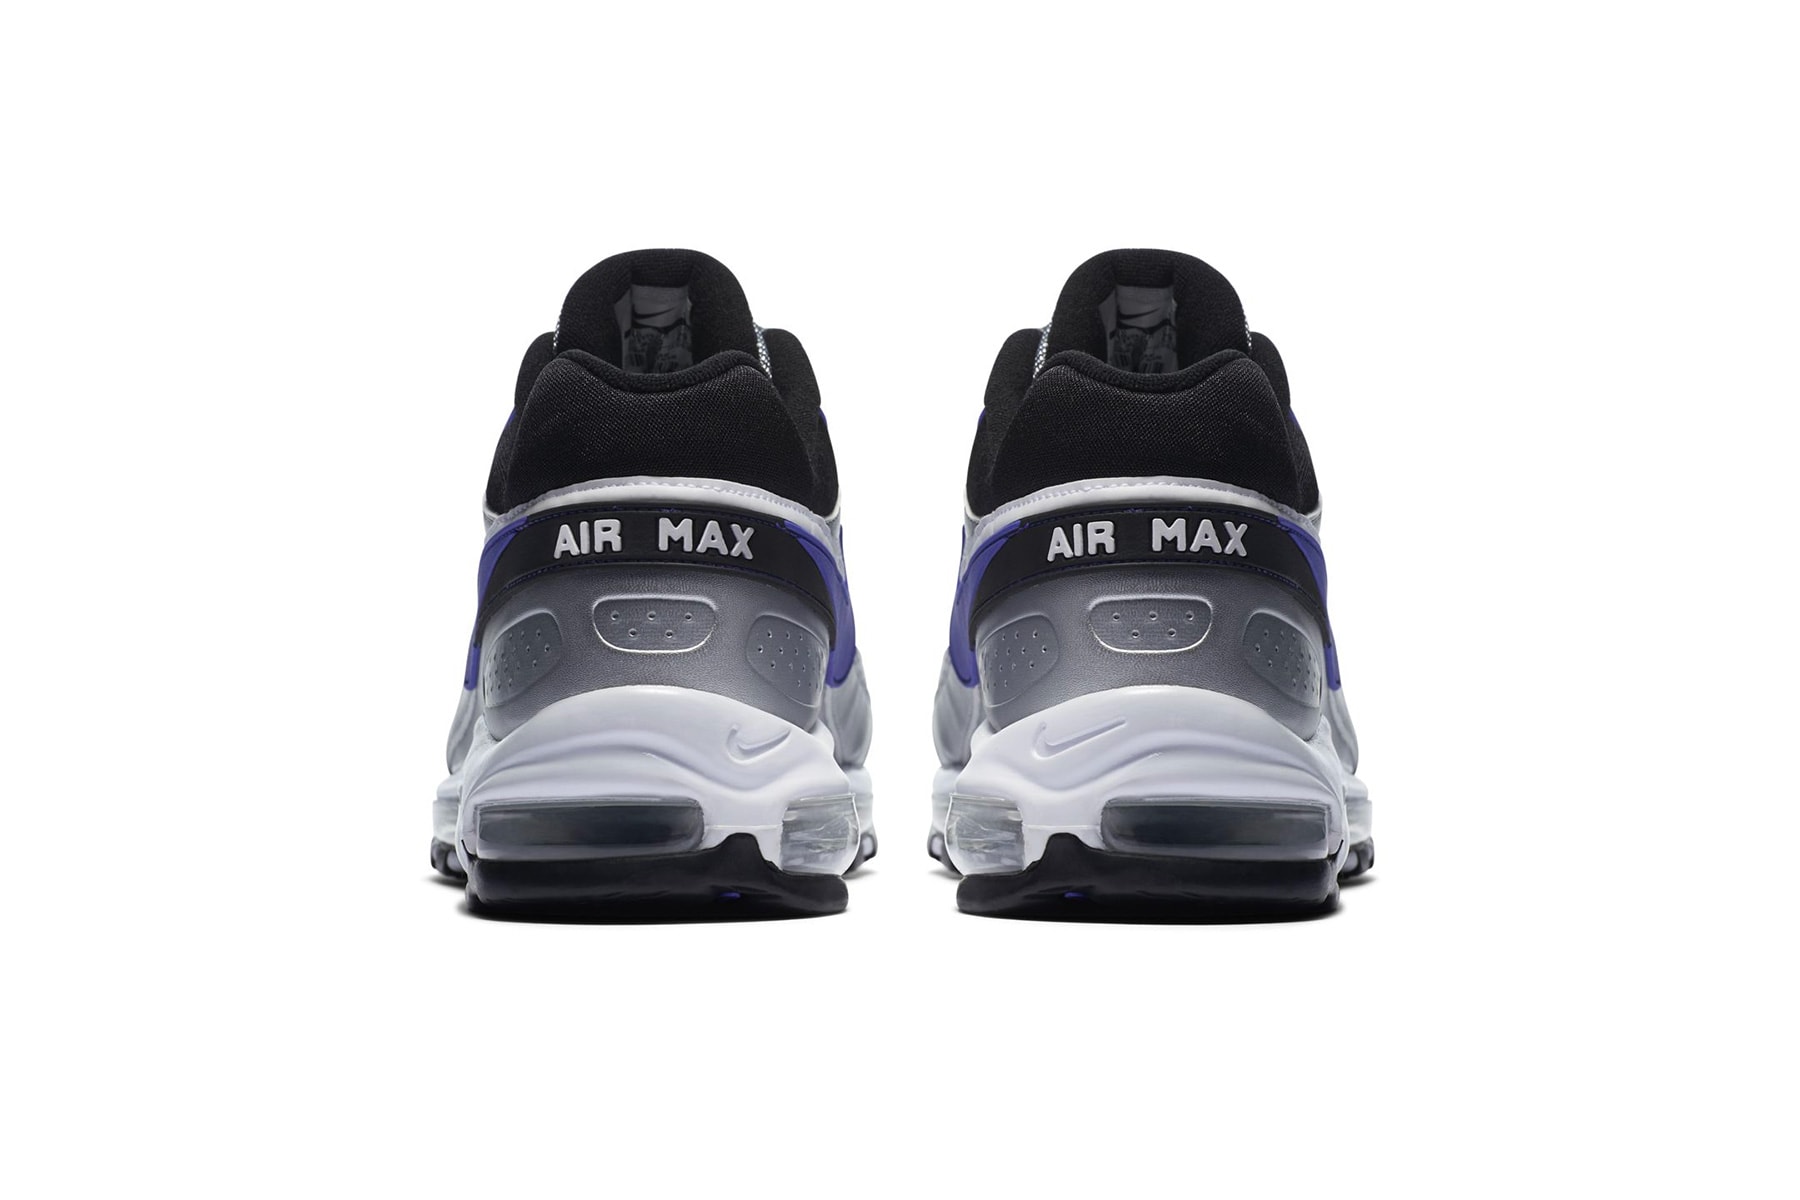 Nike Air Max 97 BW "Metallic Silver" sneaker colorway hybrid model release date info price purchase skepta